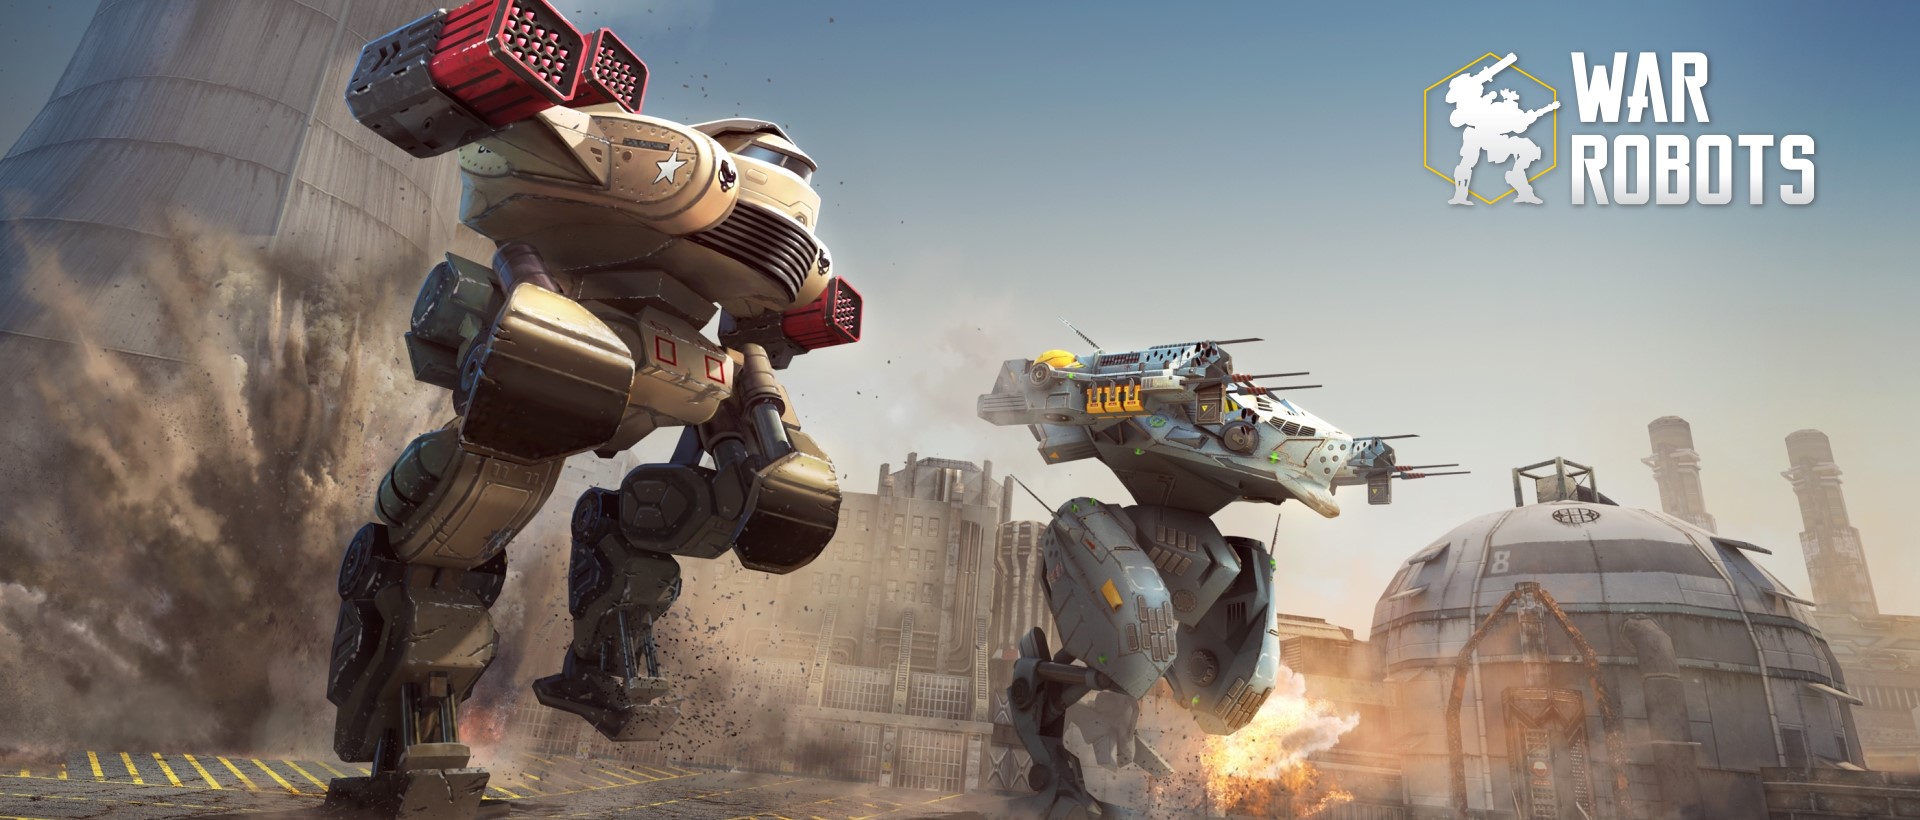 Outgoing Bake taste Download War Robots. 6v6 Tactical Multiplayer Battles on PC with  NoxPlayer-Appcenter